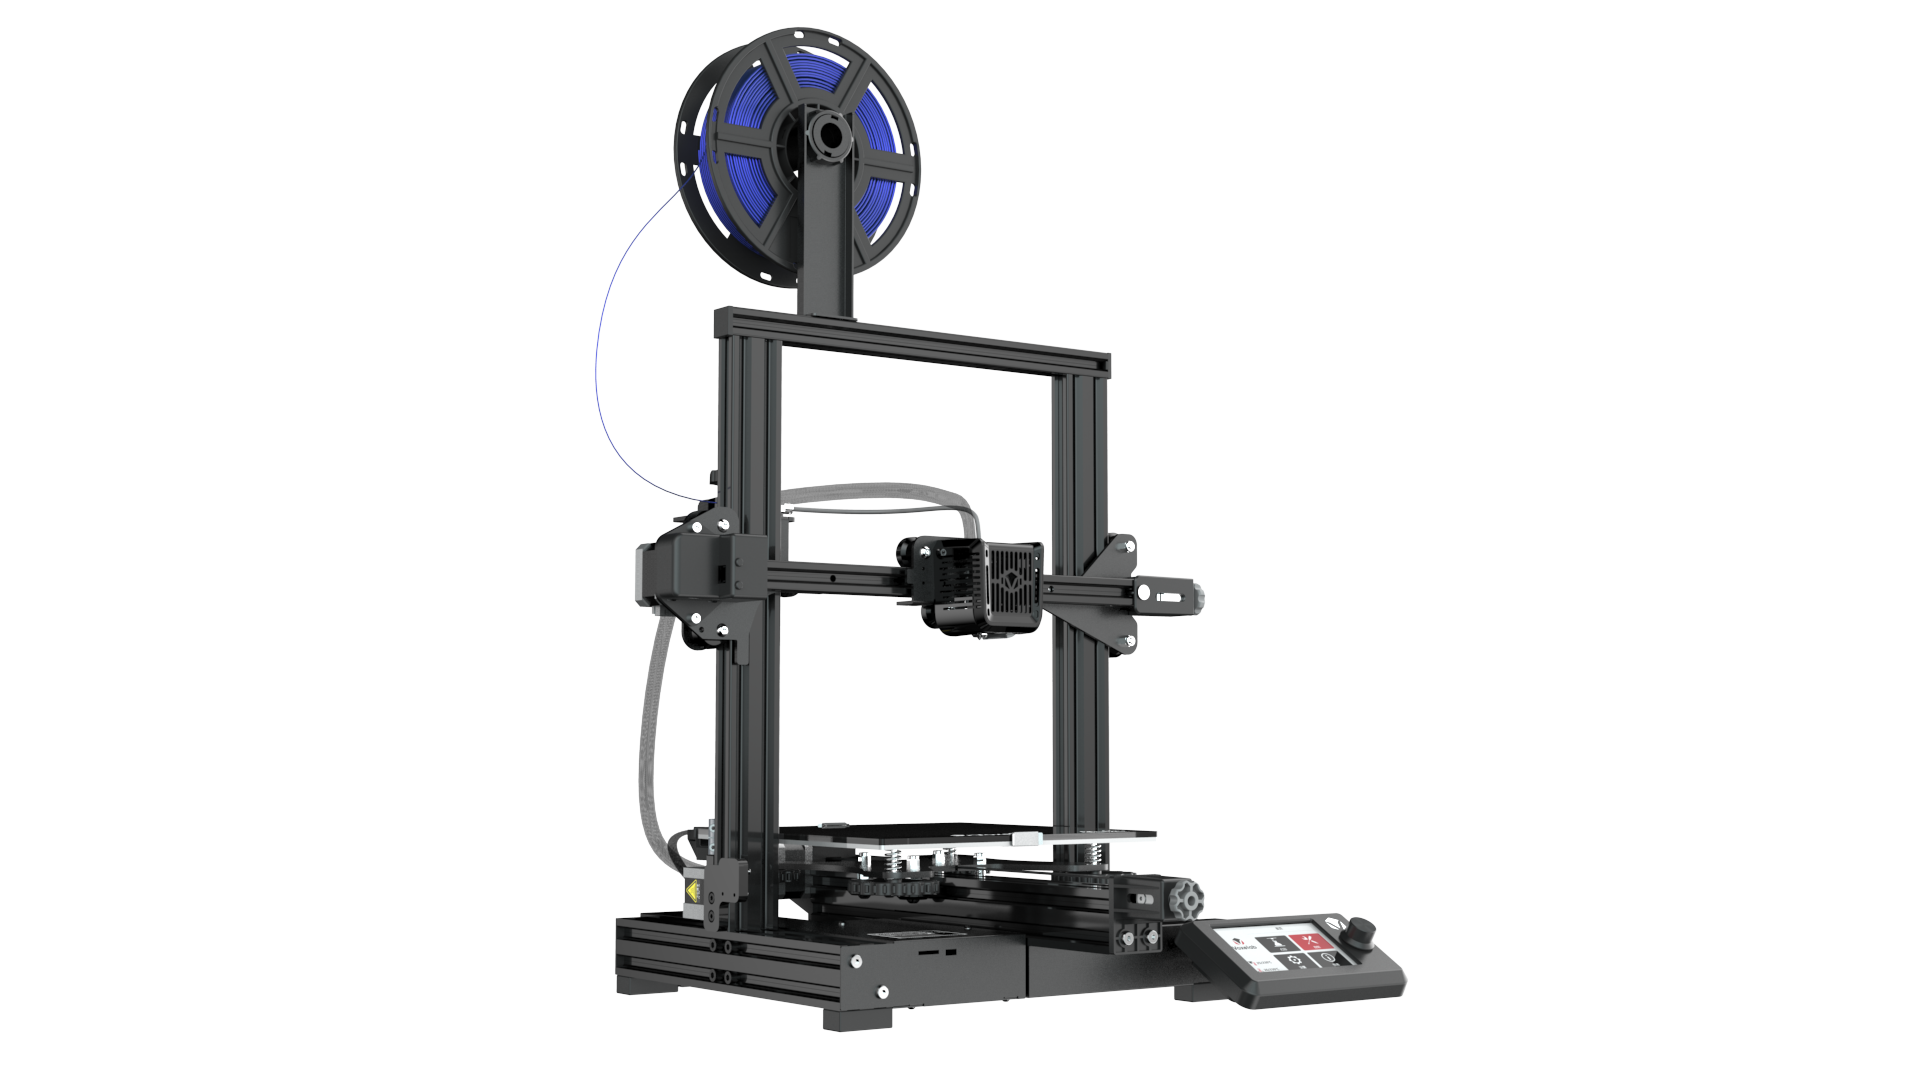 Voxelab Aquila DIY FDM 3D Printer Kit ($179USD, free shipping).